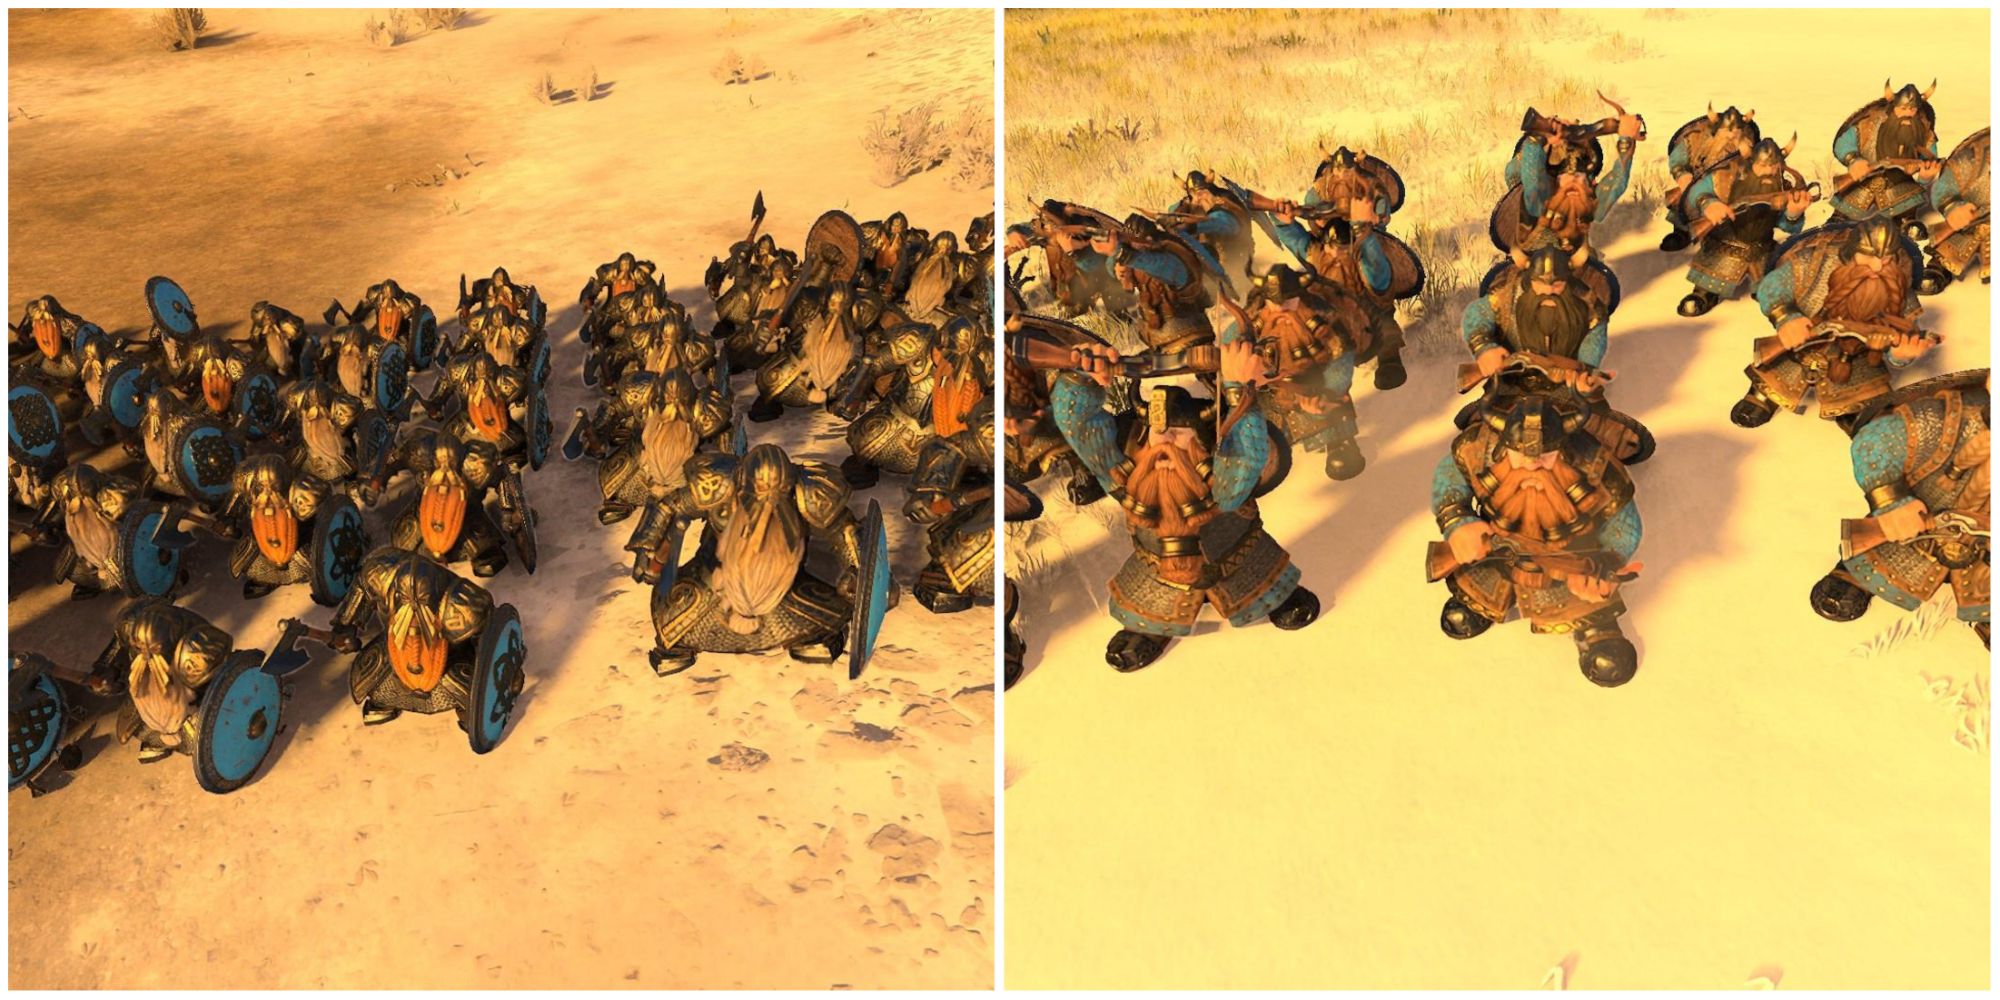 Dwarf warriors and brawls in Total War: Warhammer III.